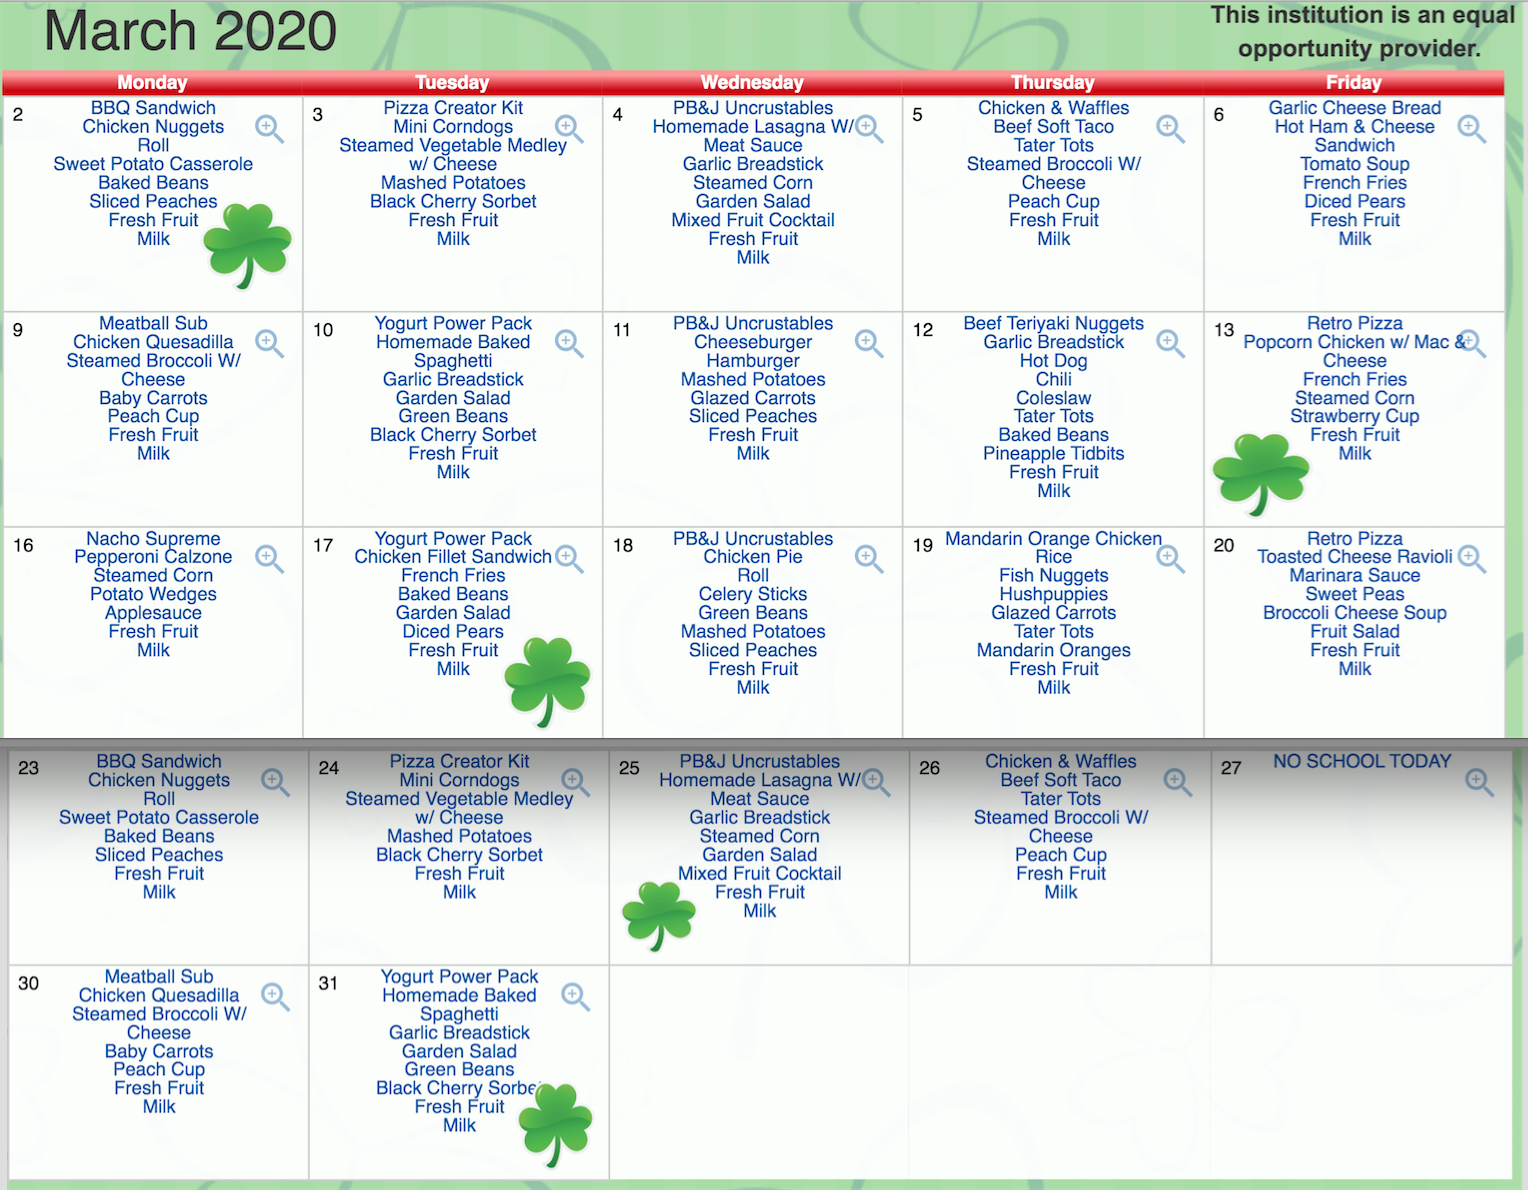 Davis Elementary School Calendar 2023